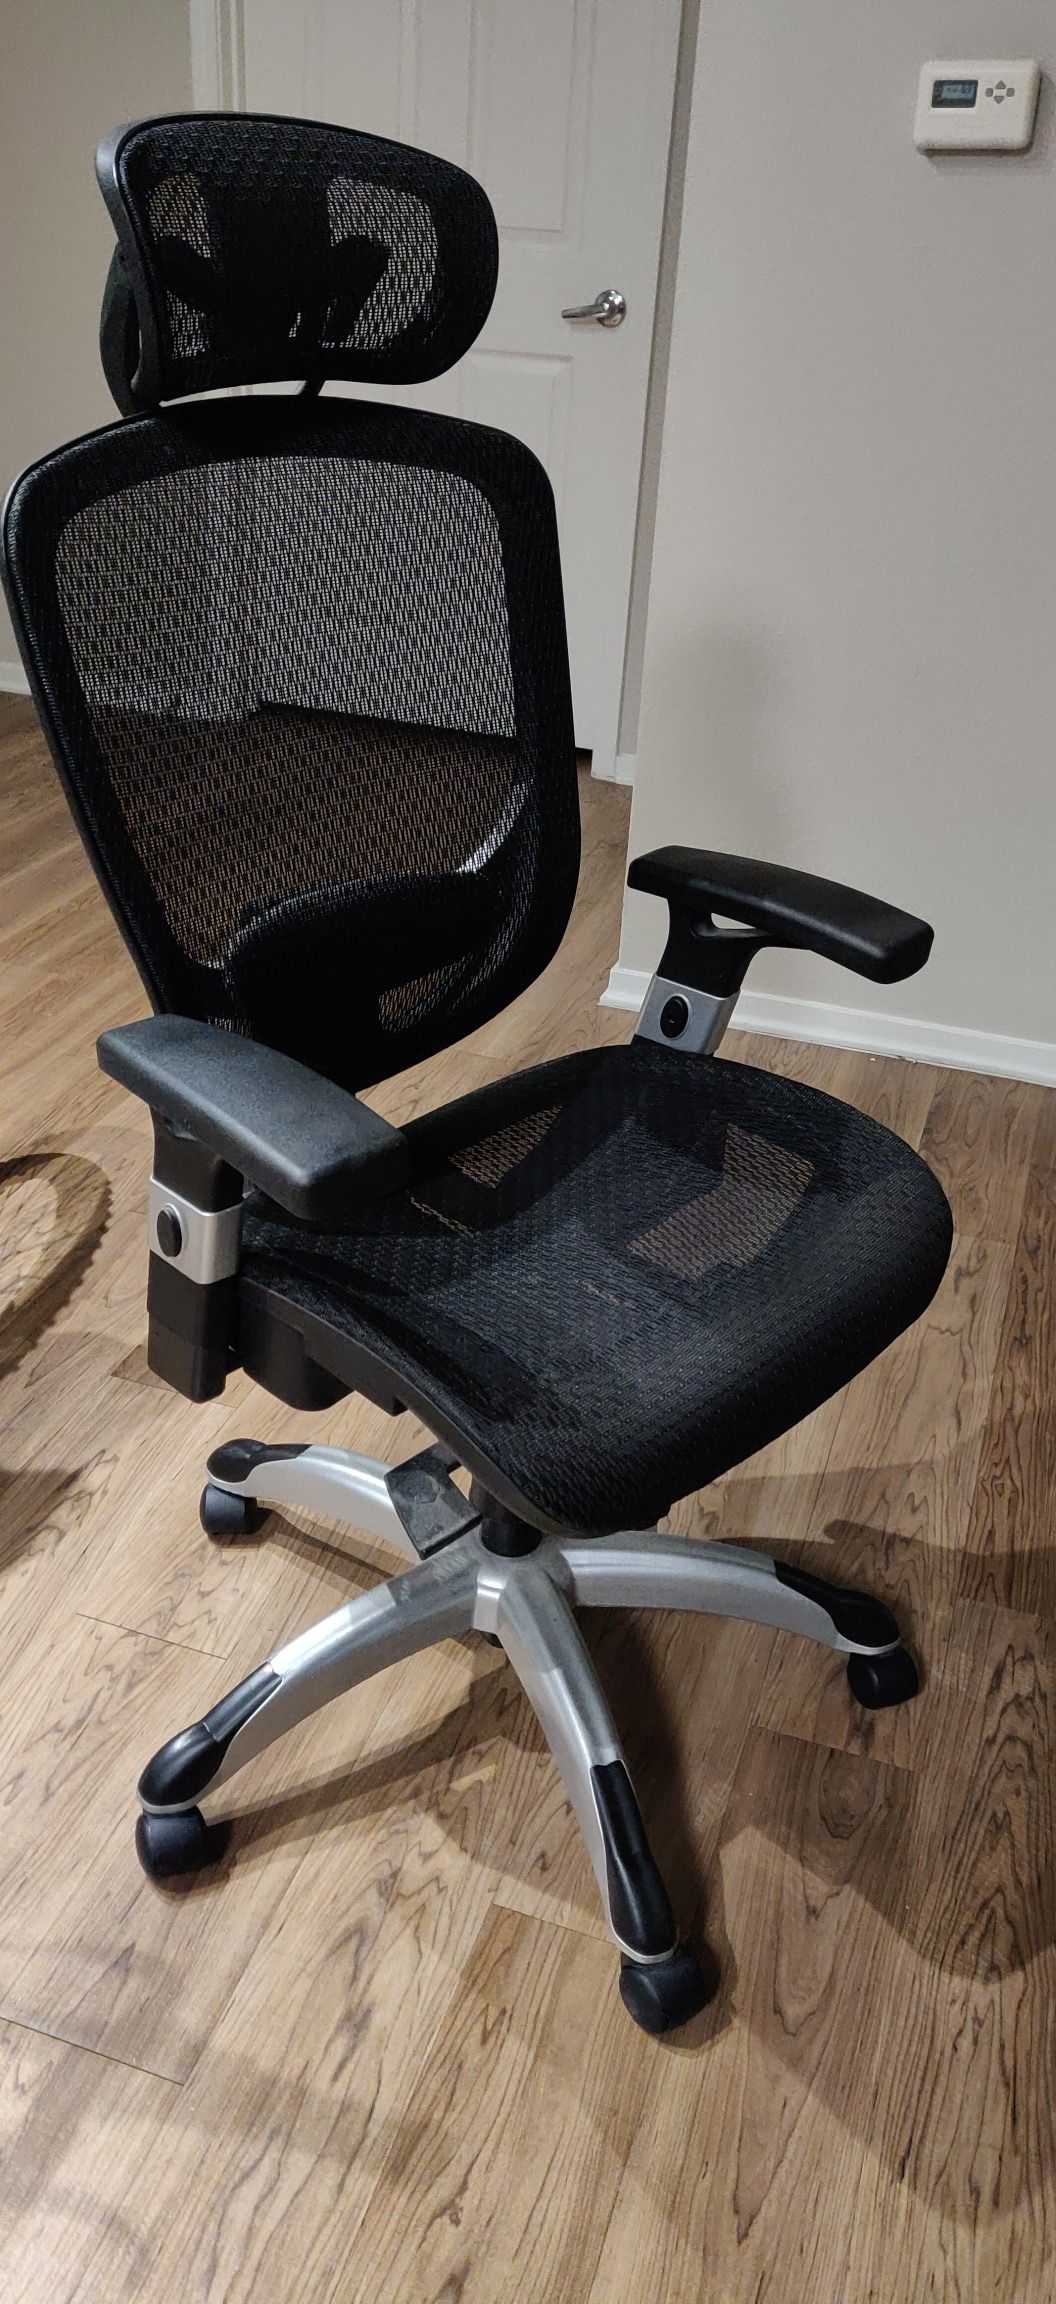 Office chair - Ergonomic